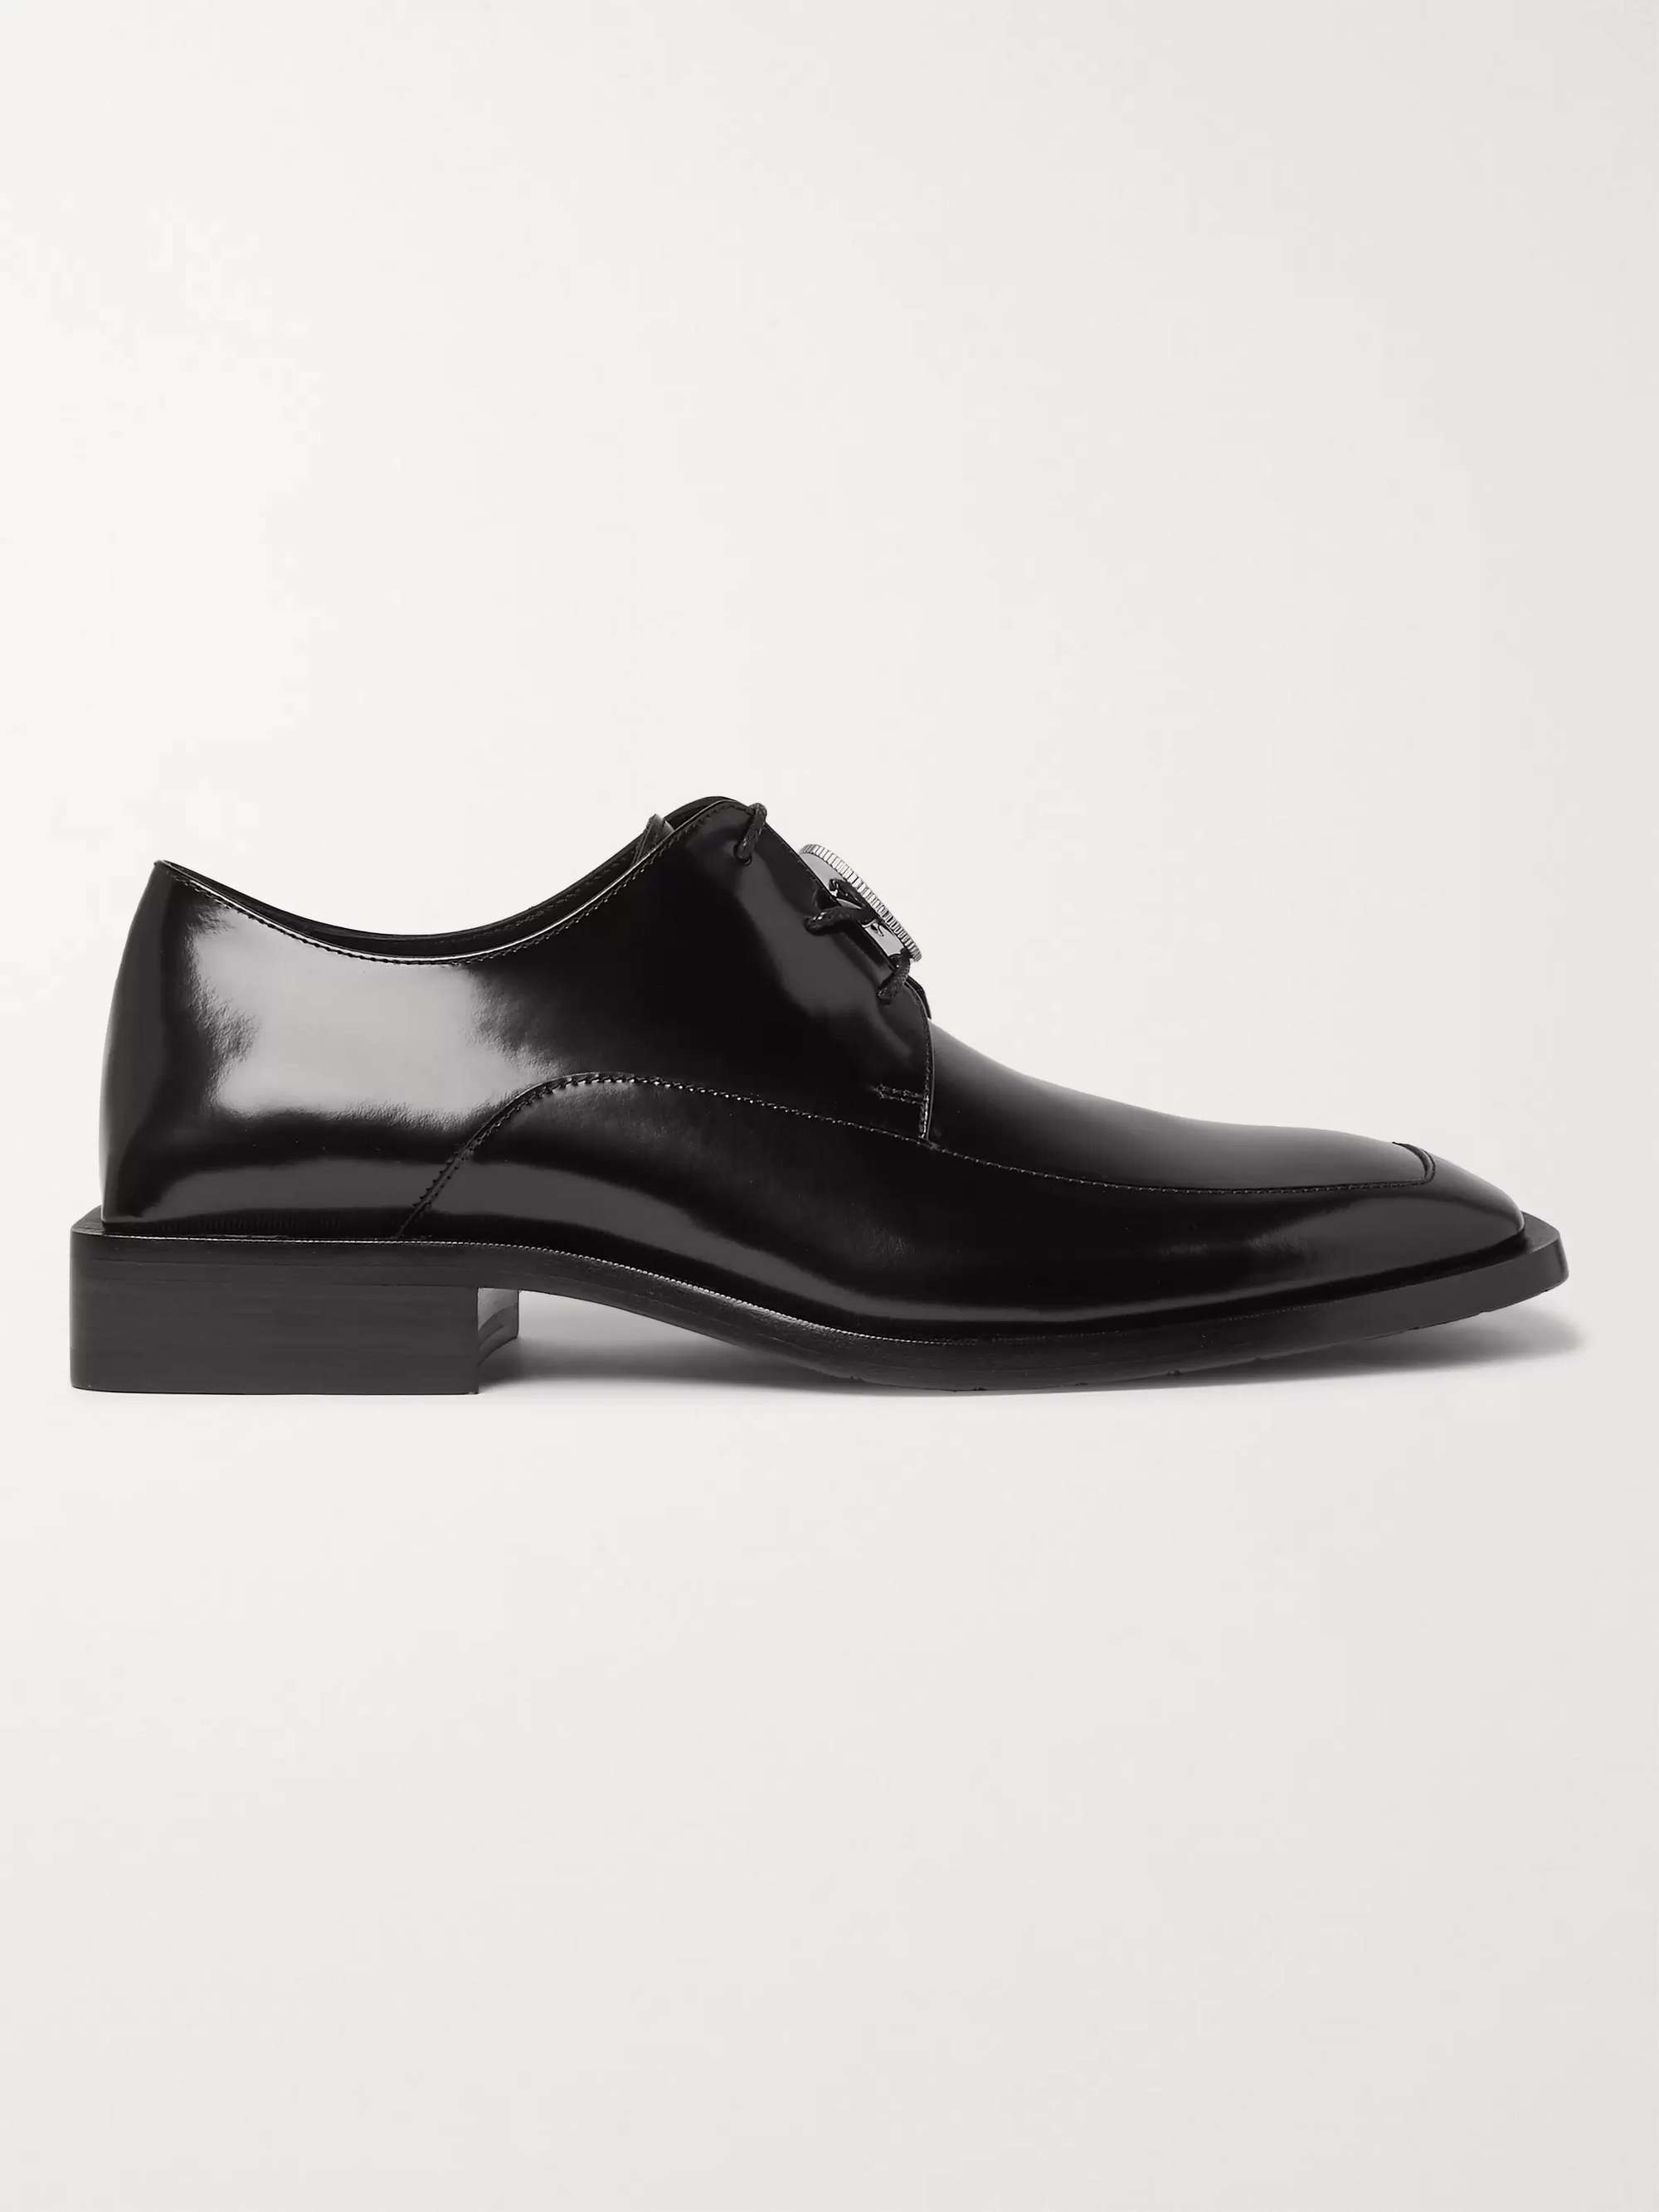 BALENCIAGA Logo-Detailed Patent-Leather Derby Shoes for Men | MR PORTER